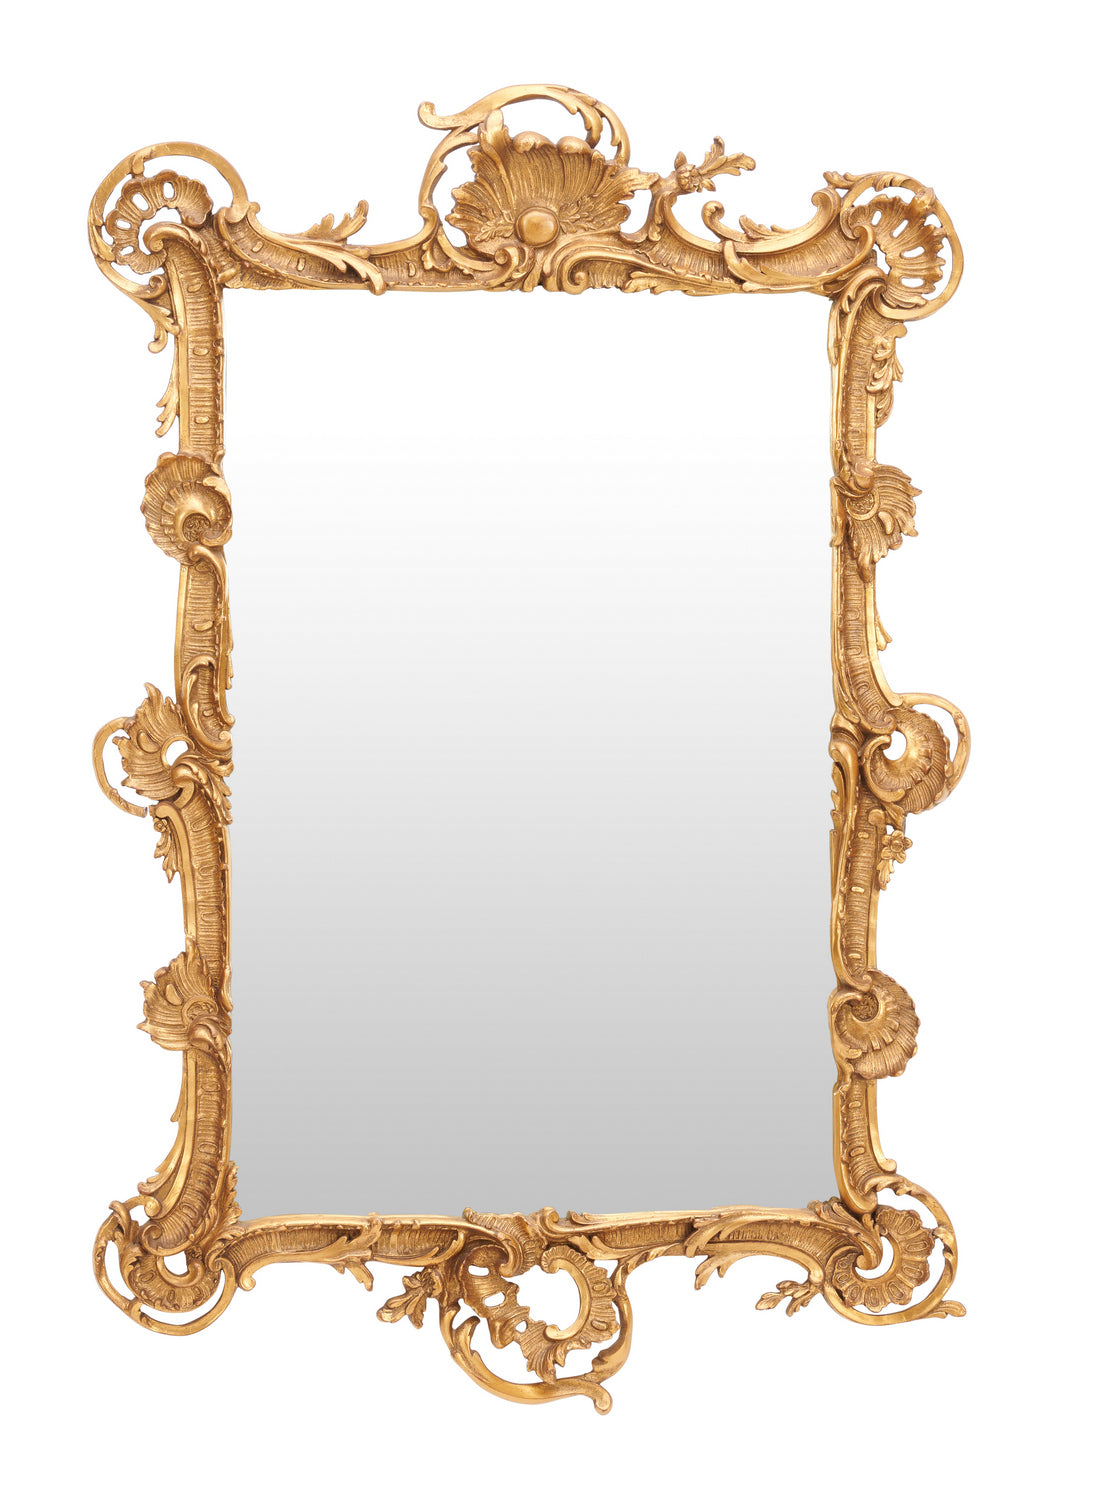 A Rococo Style Pier Mirror